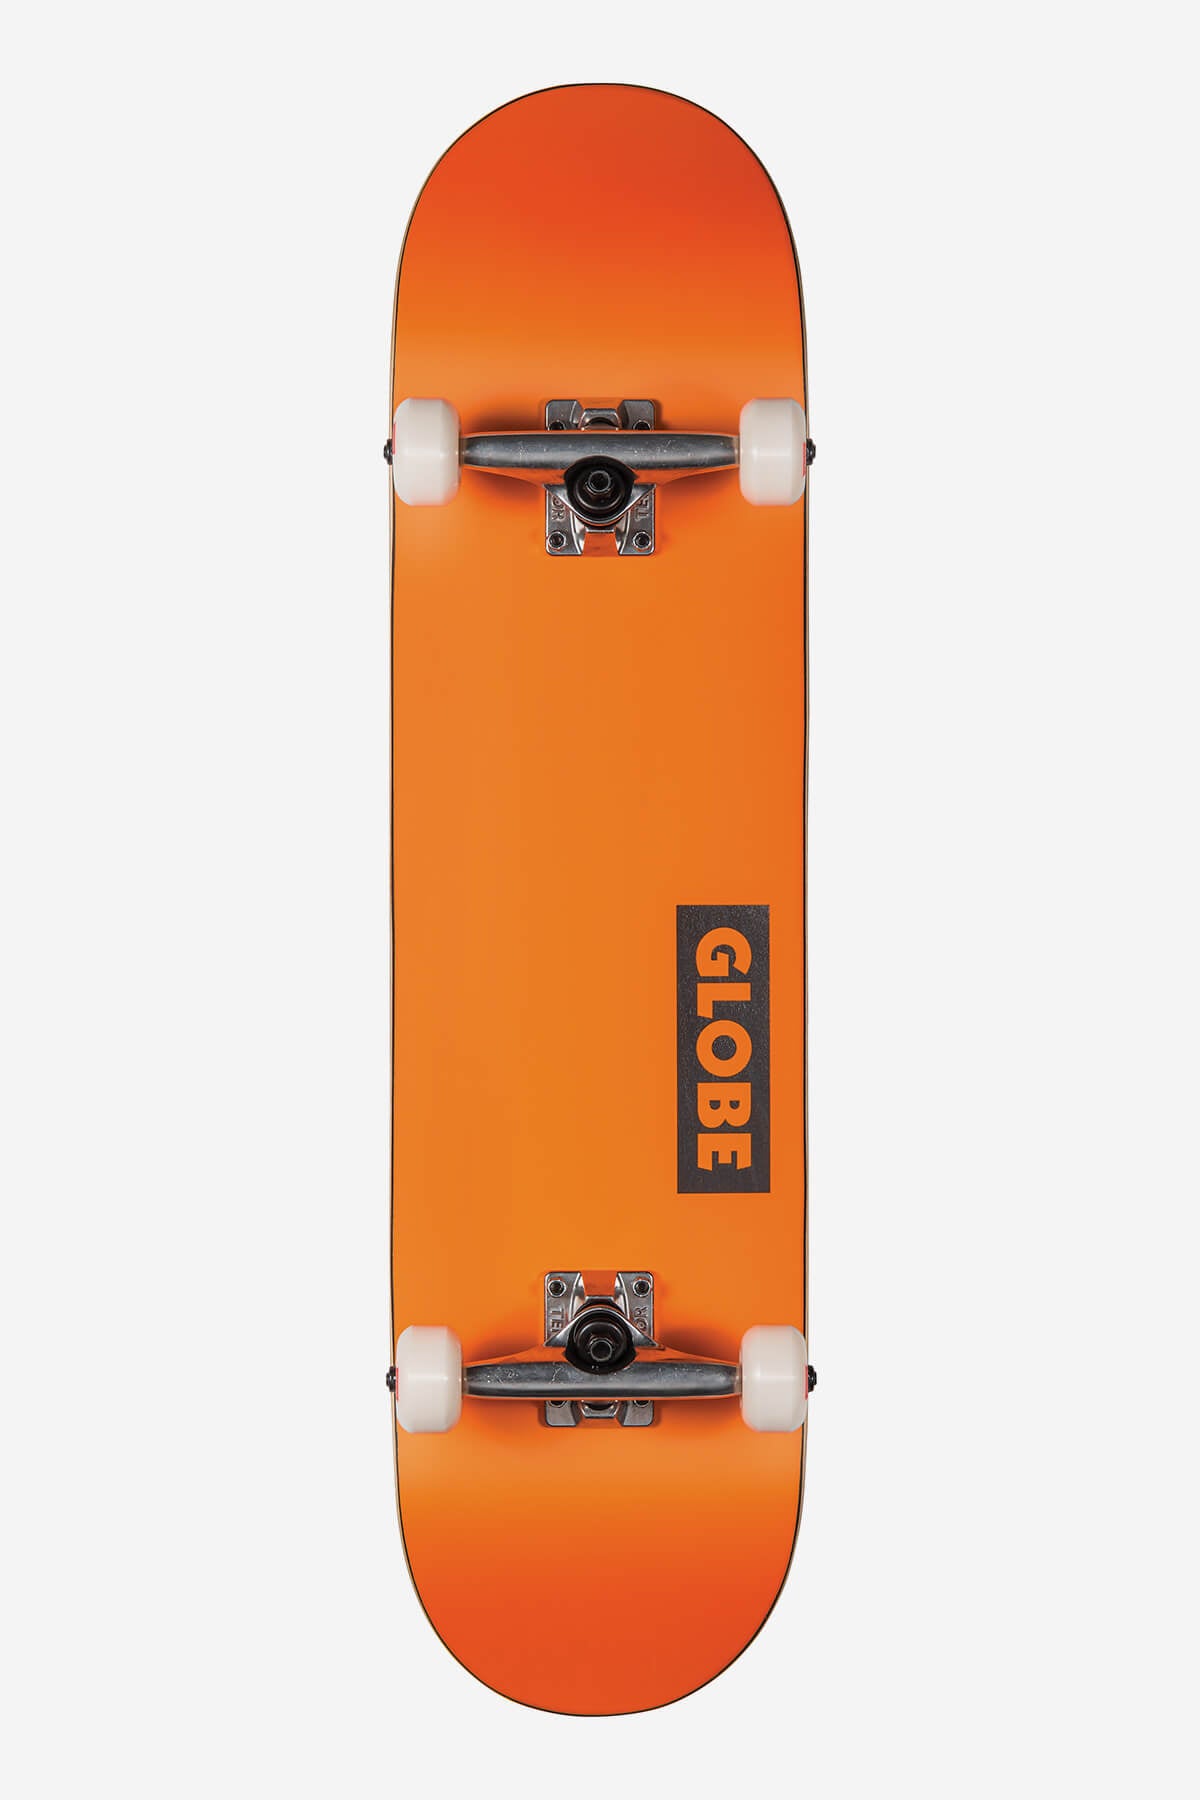 goodstock neon orange 8.125" complete skateboard